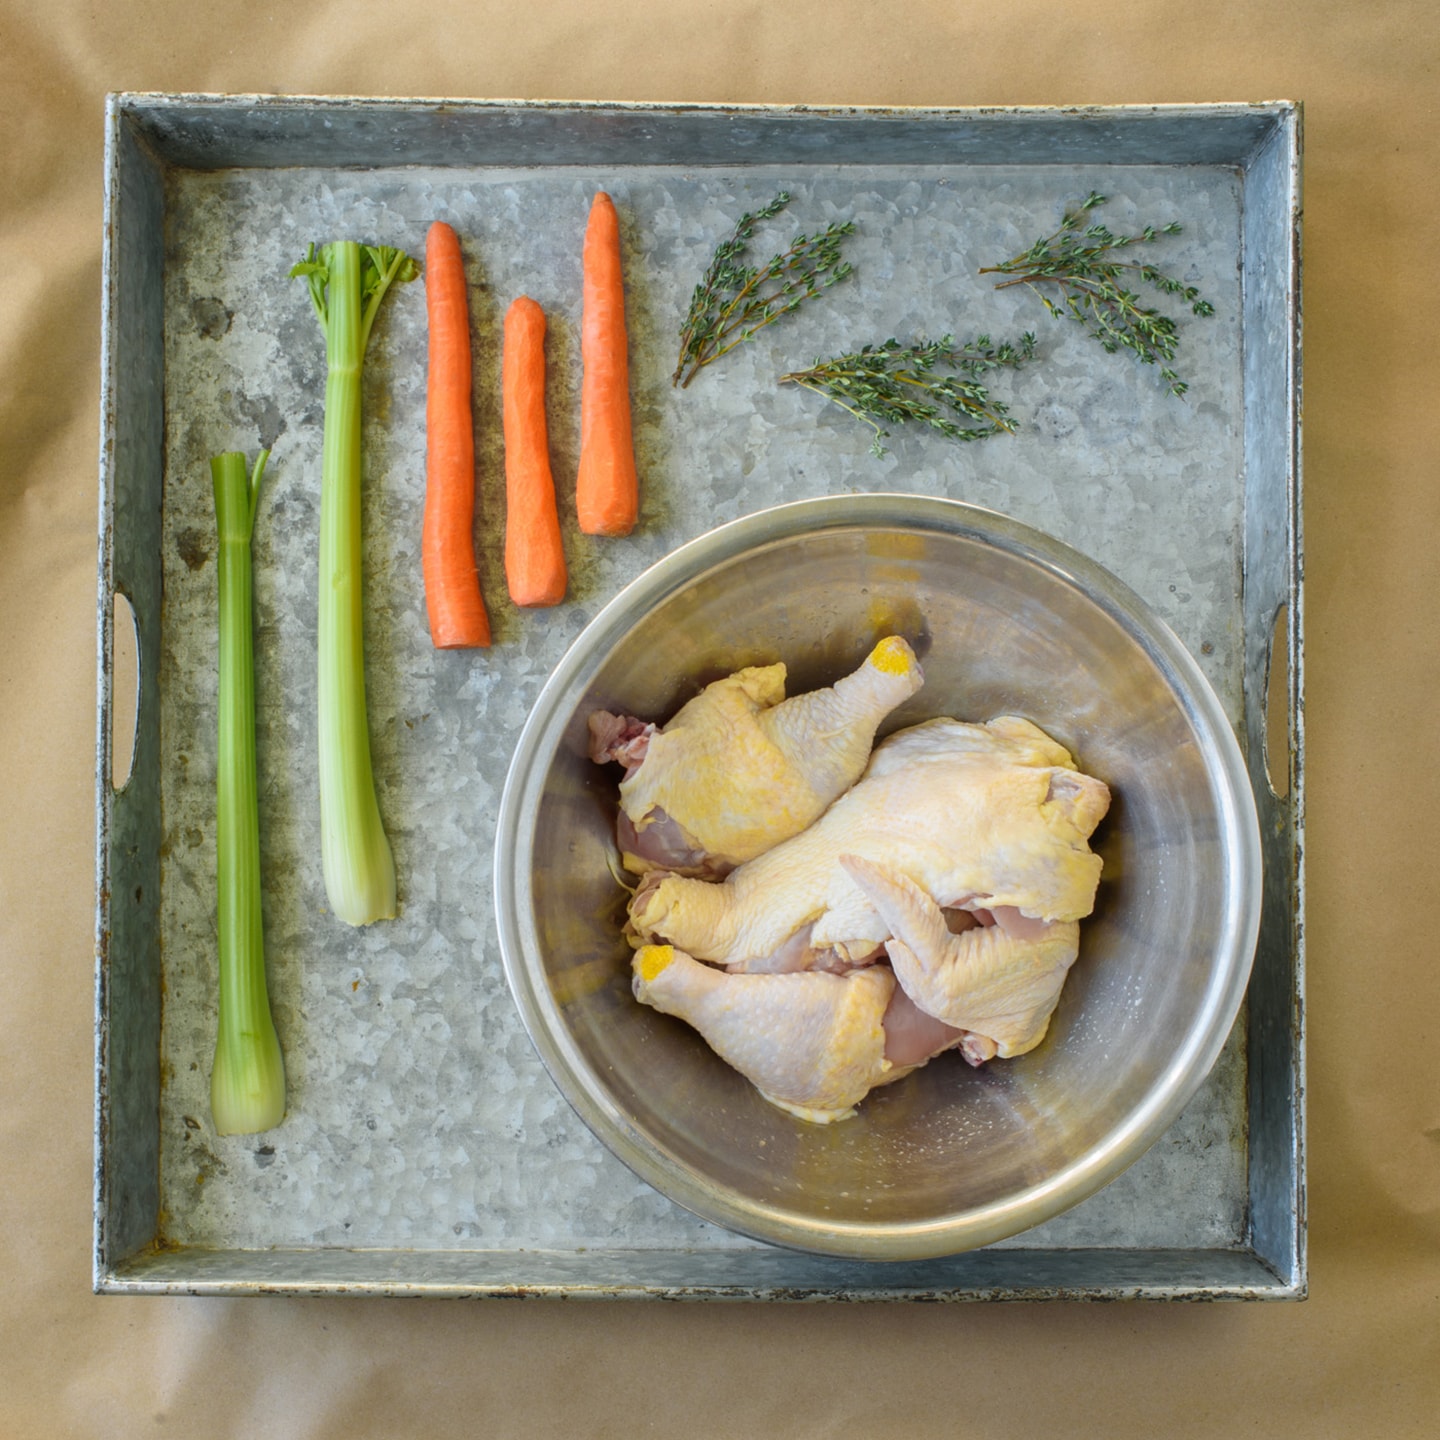 celery carrots herbs raw chicken